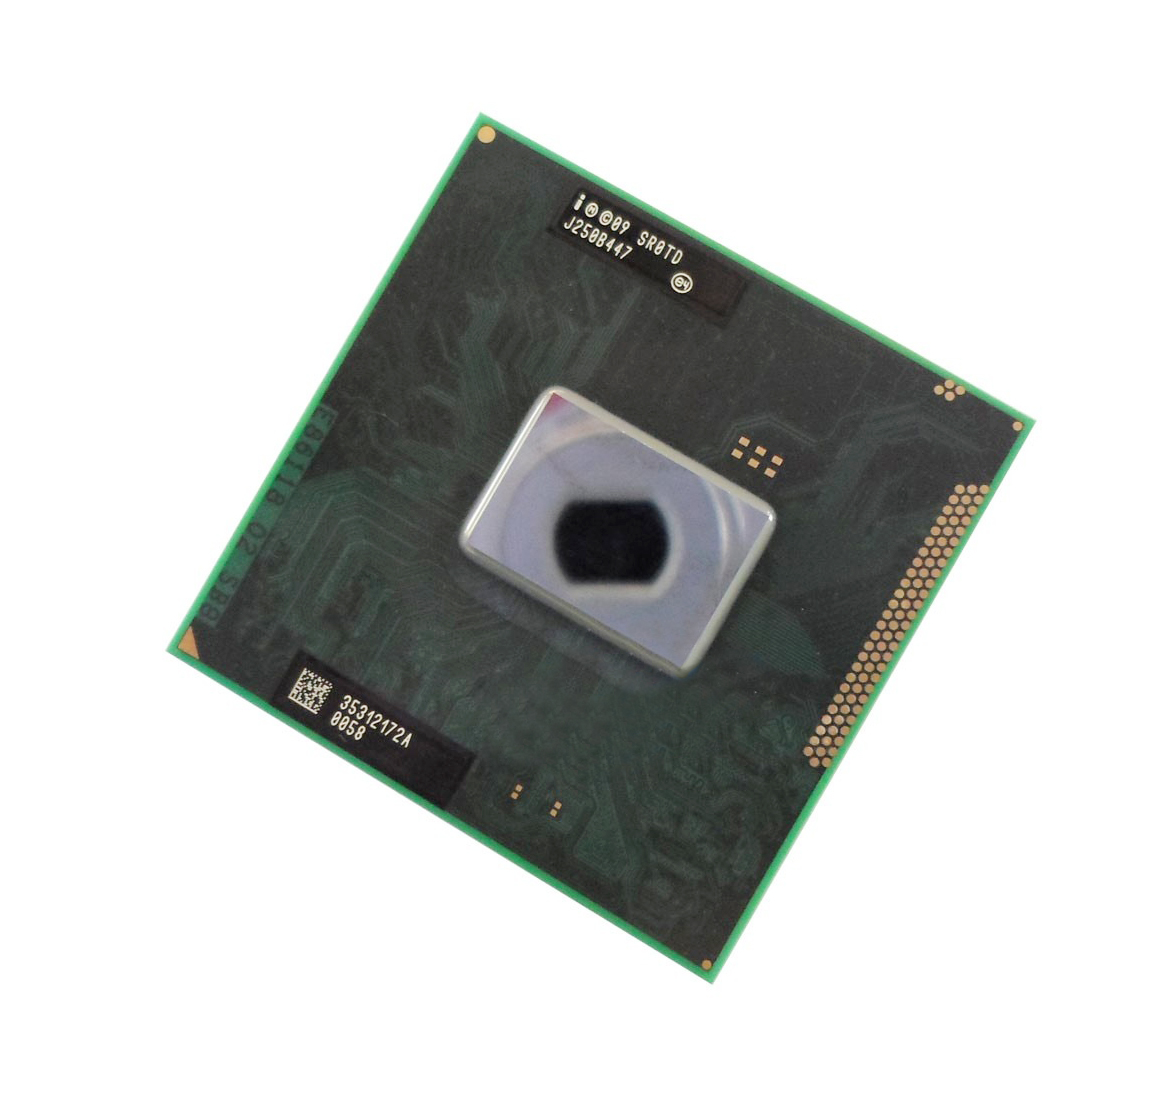 I32348M Intel Core i3-2348M Dual Core 2.30GHz 5.00GT/s DMI 3MB L3 Cache Socket PGA988 Mobile Processor